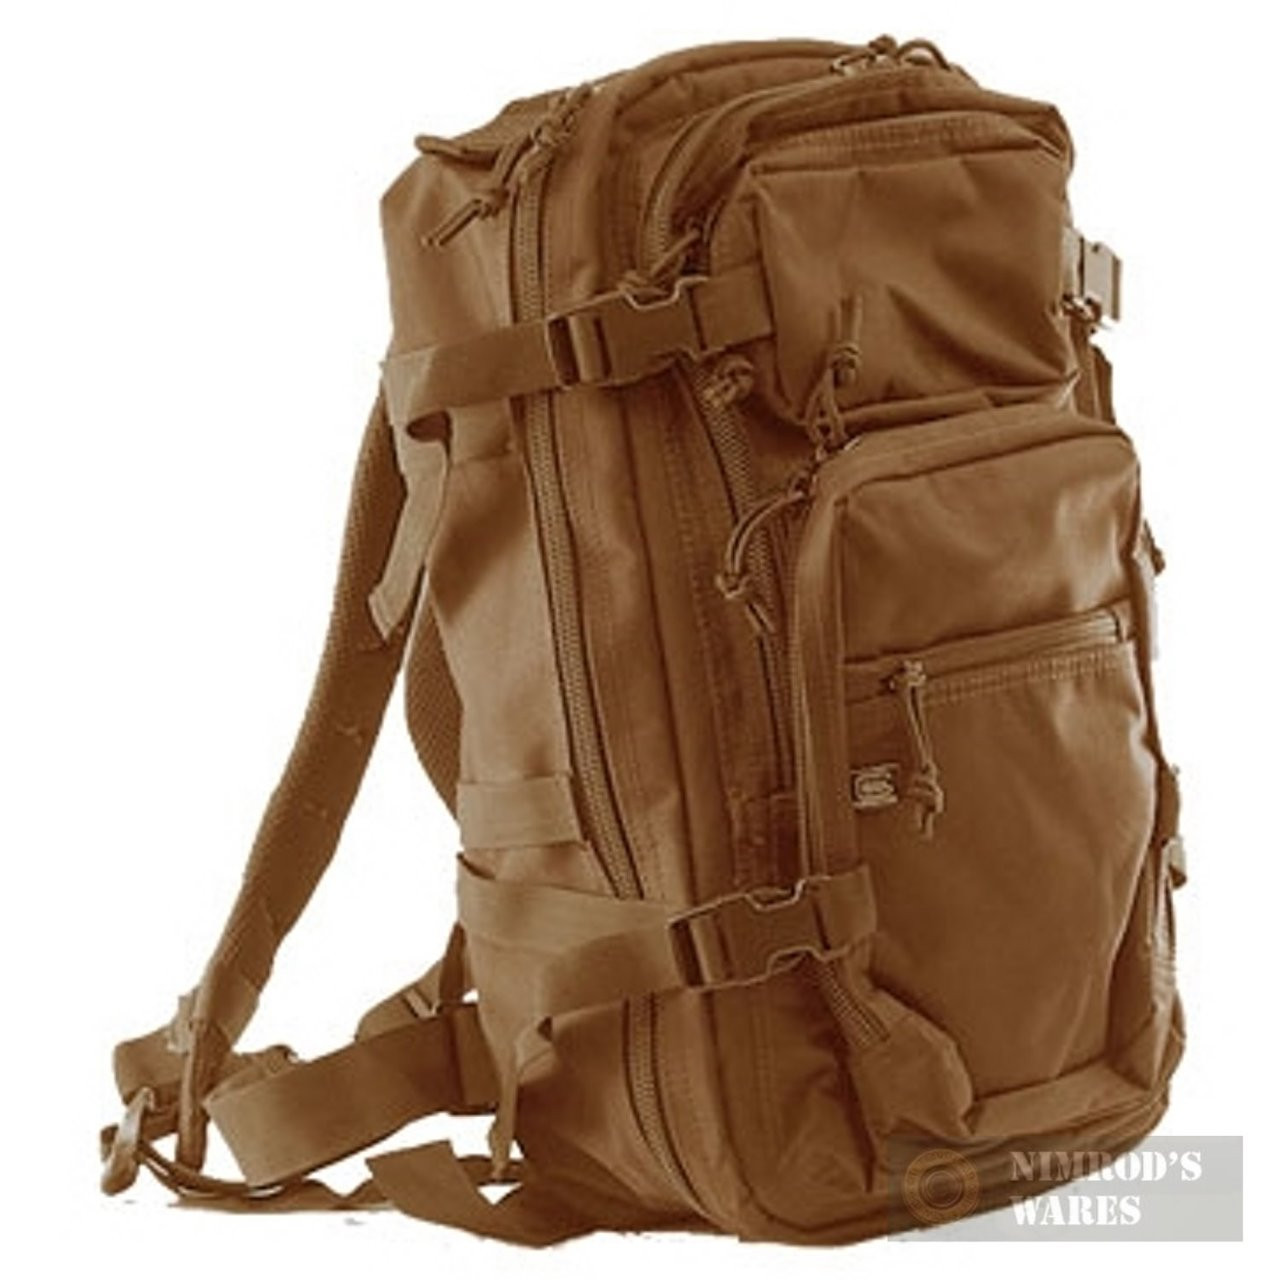 Glock AS02001 OEM Coyote Tan Police Military Tactical Gear Backpack Bag 